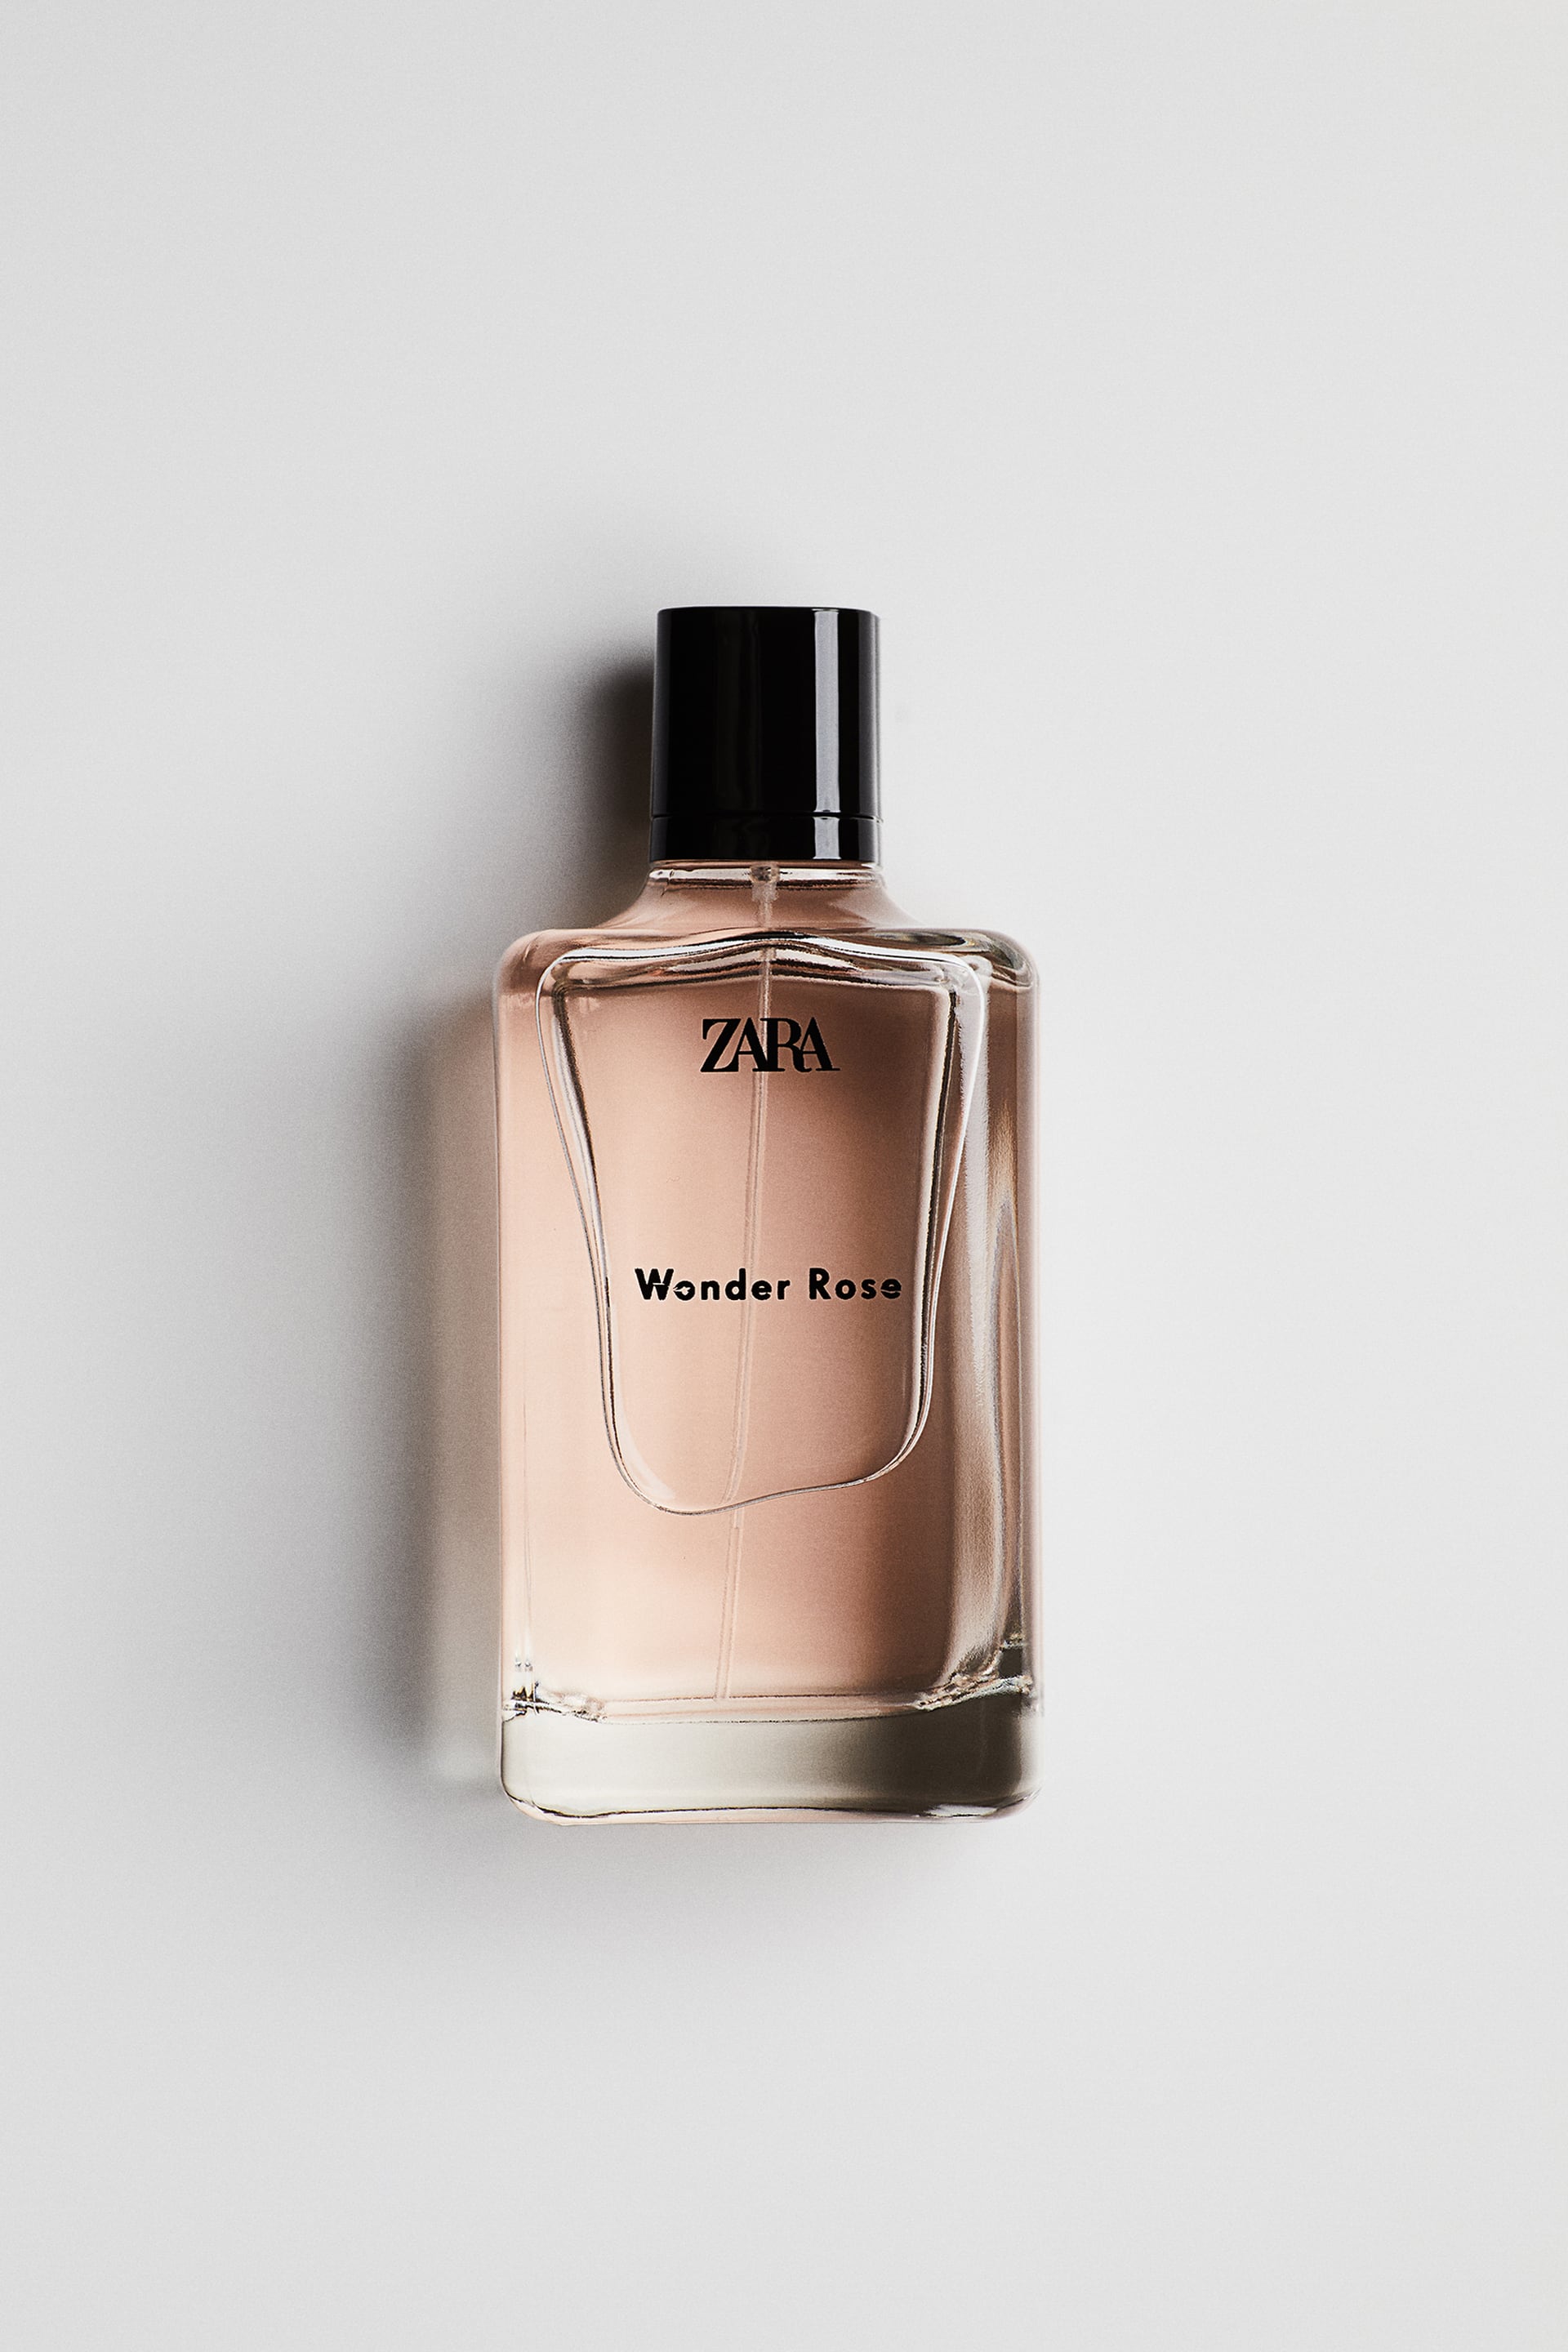 Zara TOP 10 Fragrances, Awesome Cheapies!